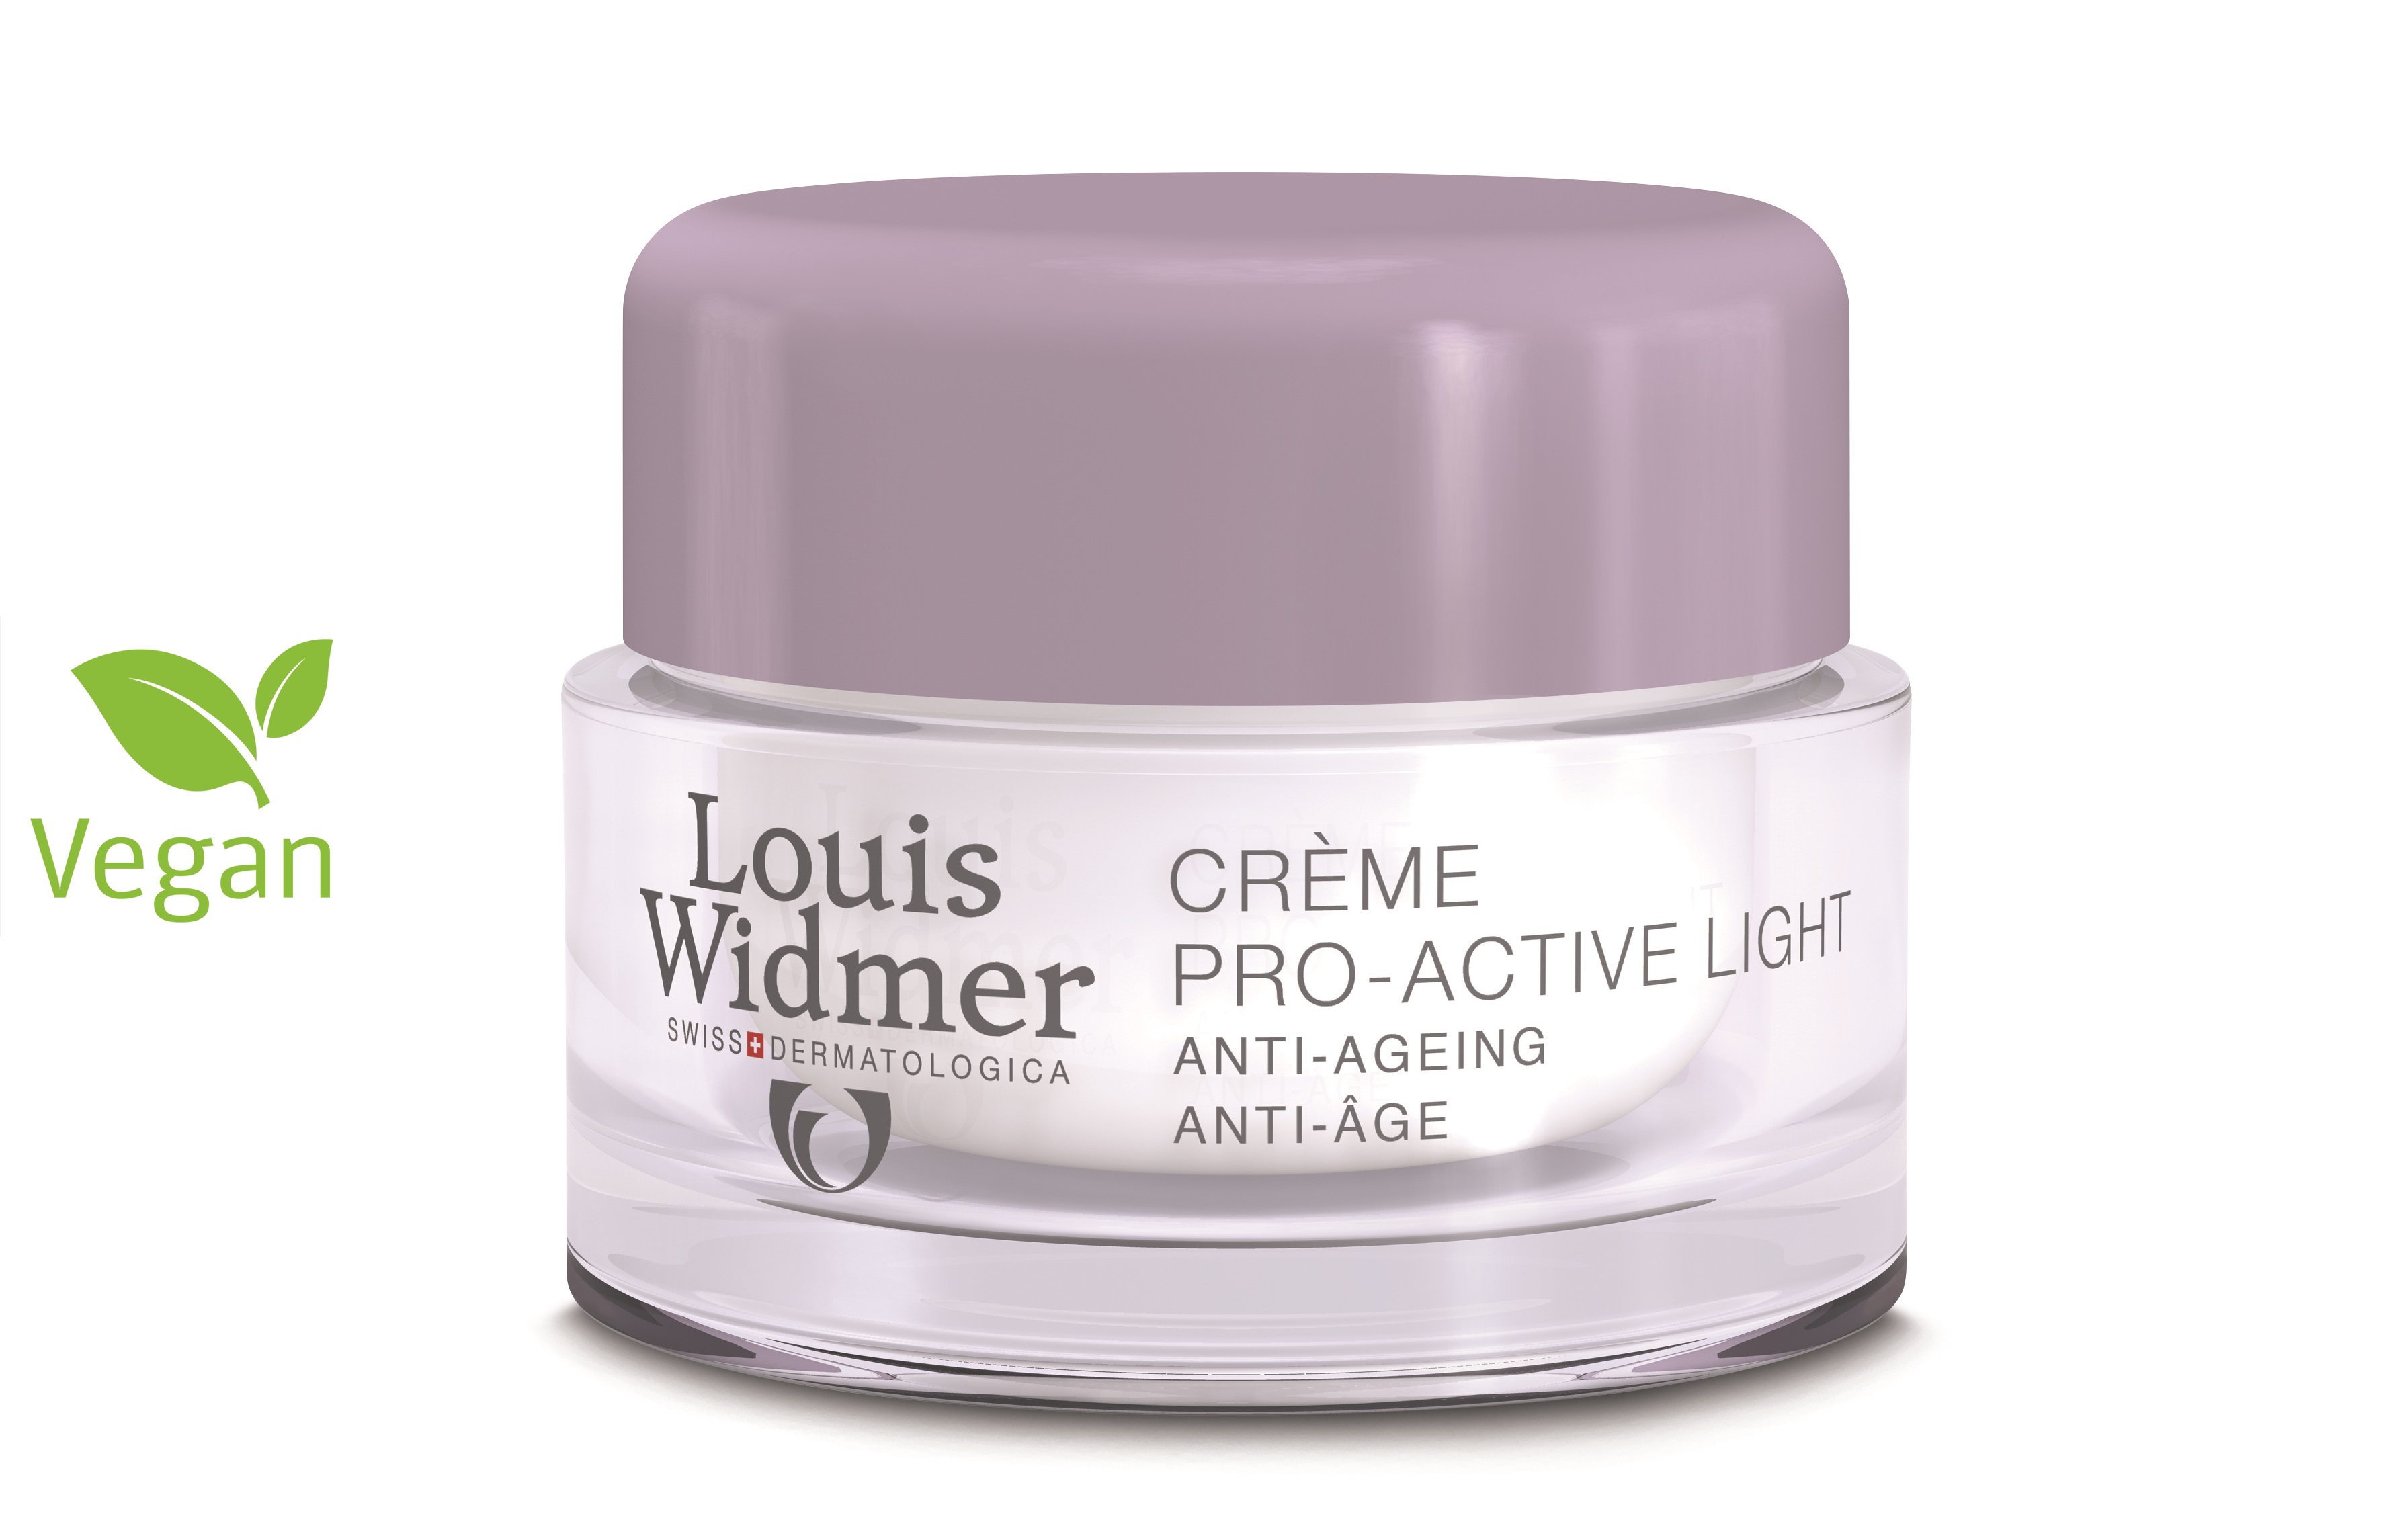 Widmer Creme Pro-Active Light